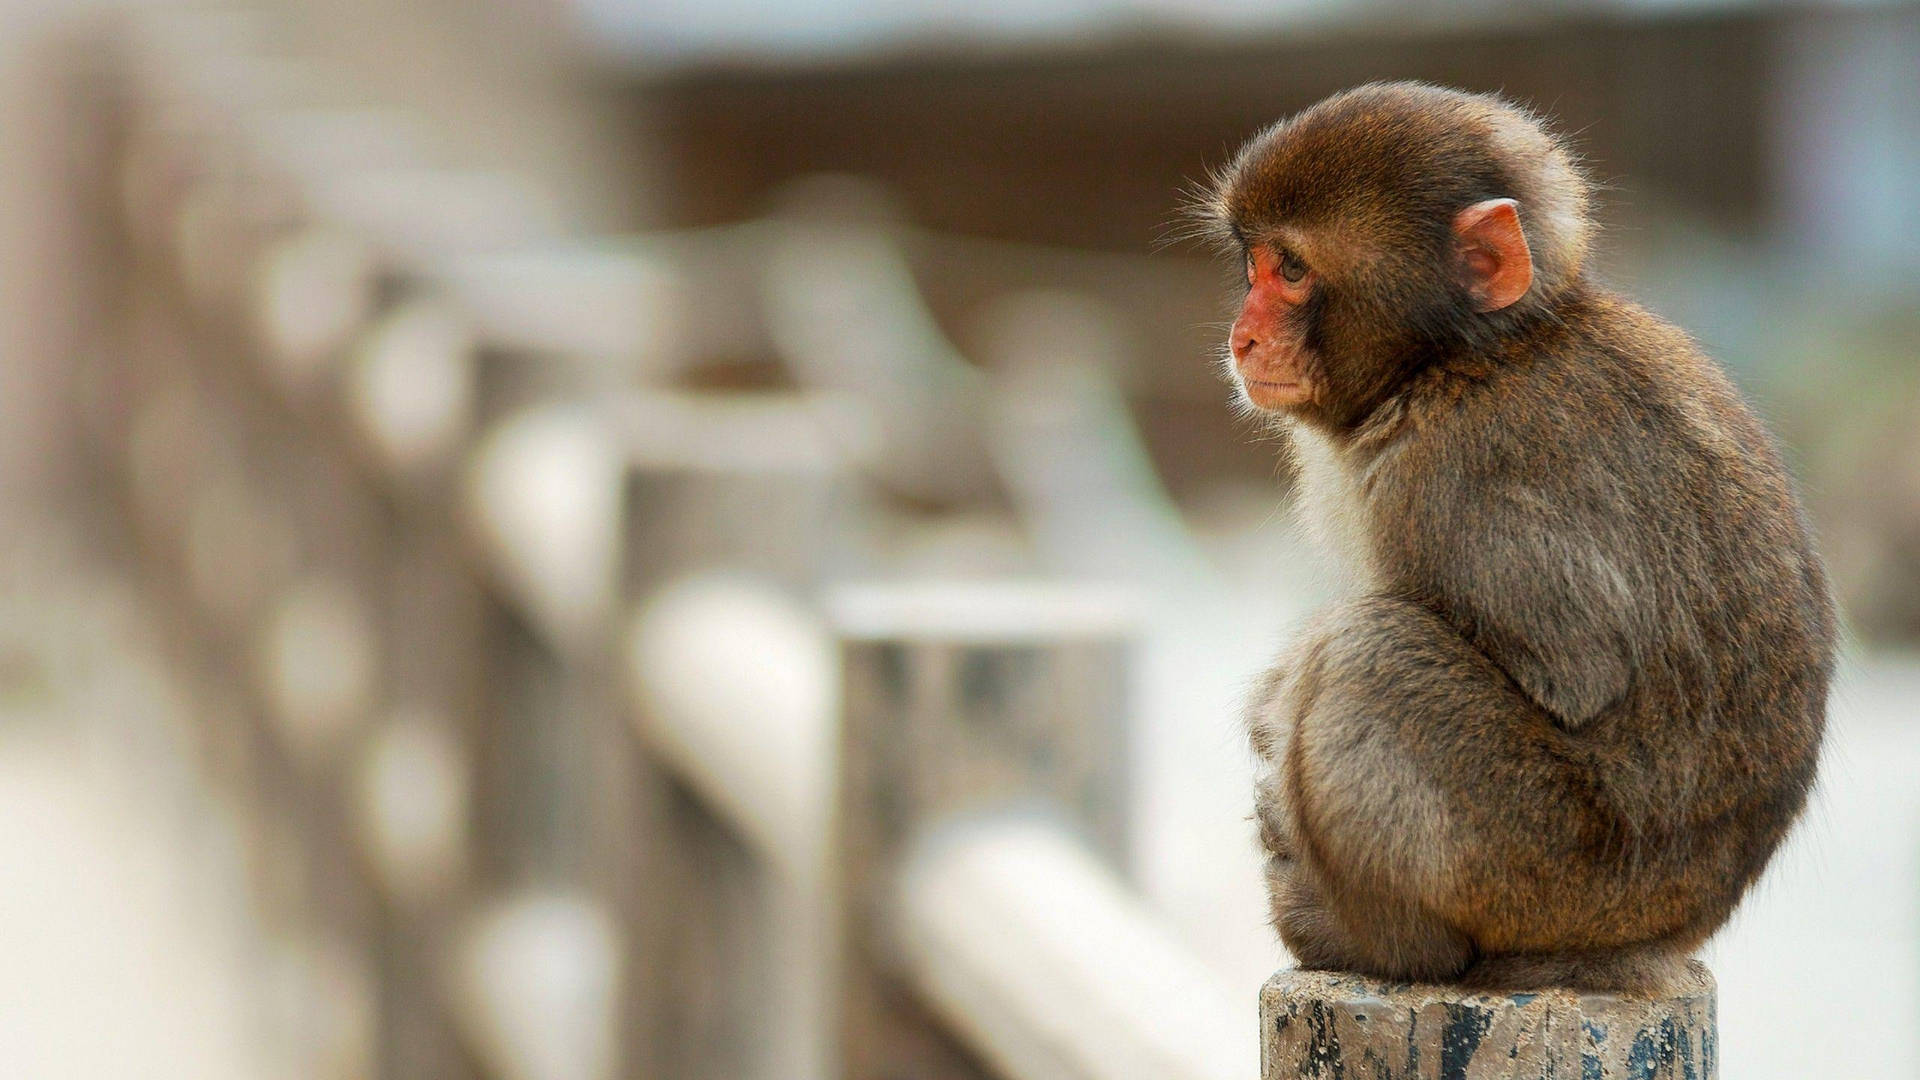 Cute Monkey On A Bridge